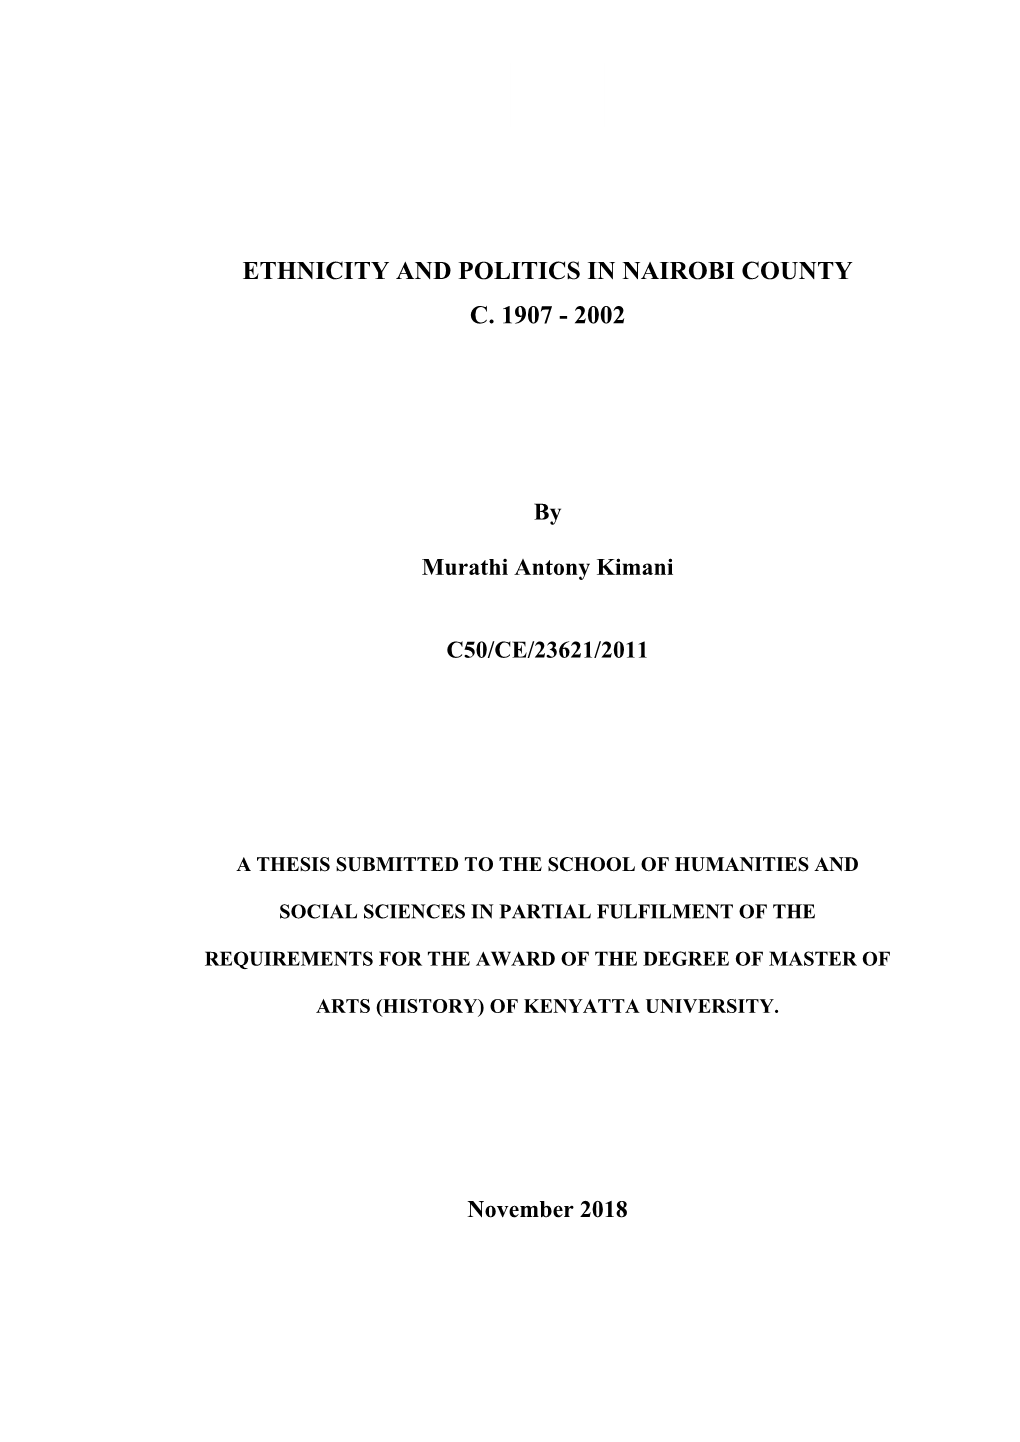 Ethnicity and Politics in Nairobi County C. 1907 - 2002